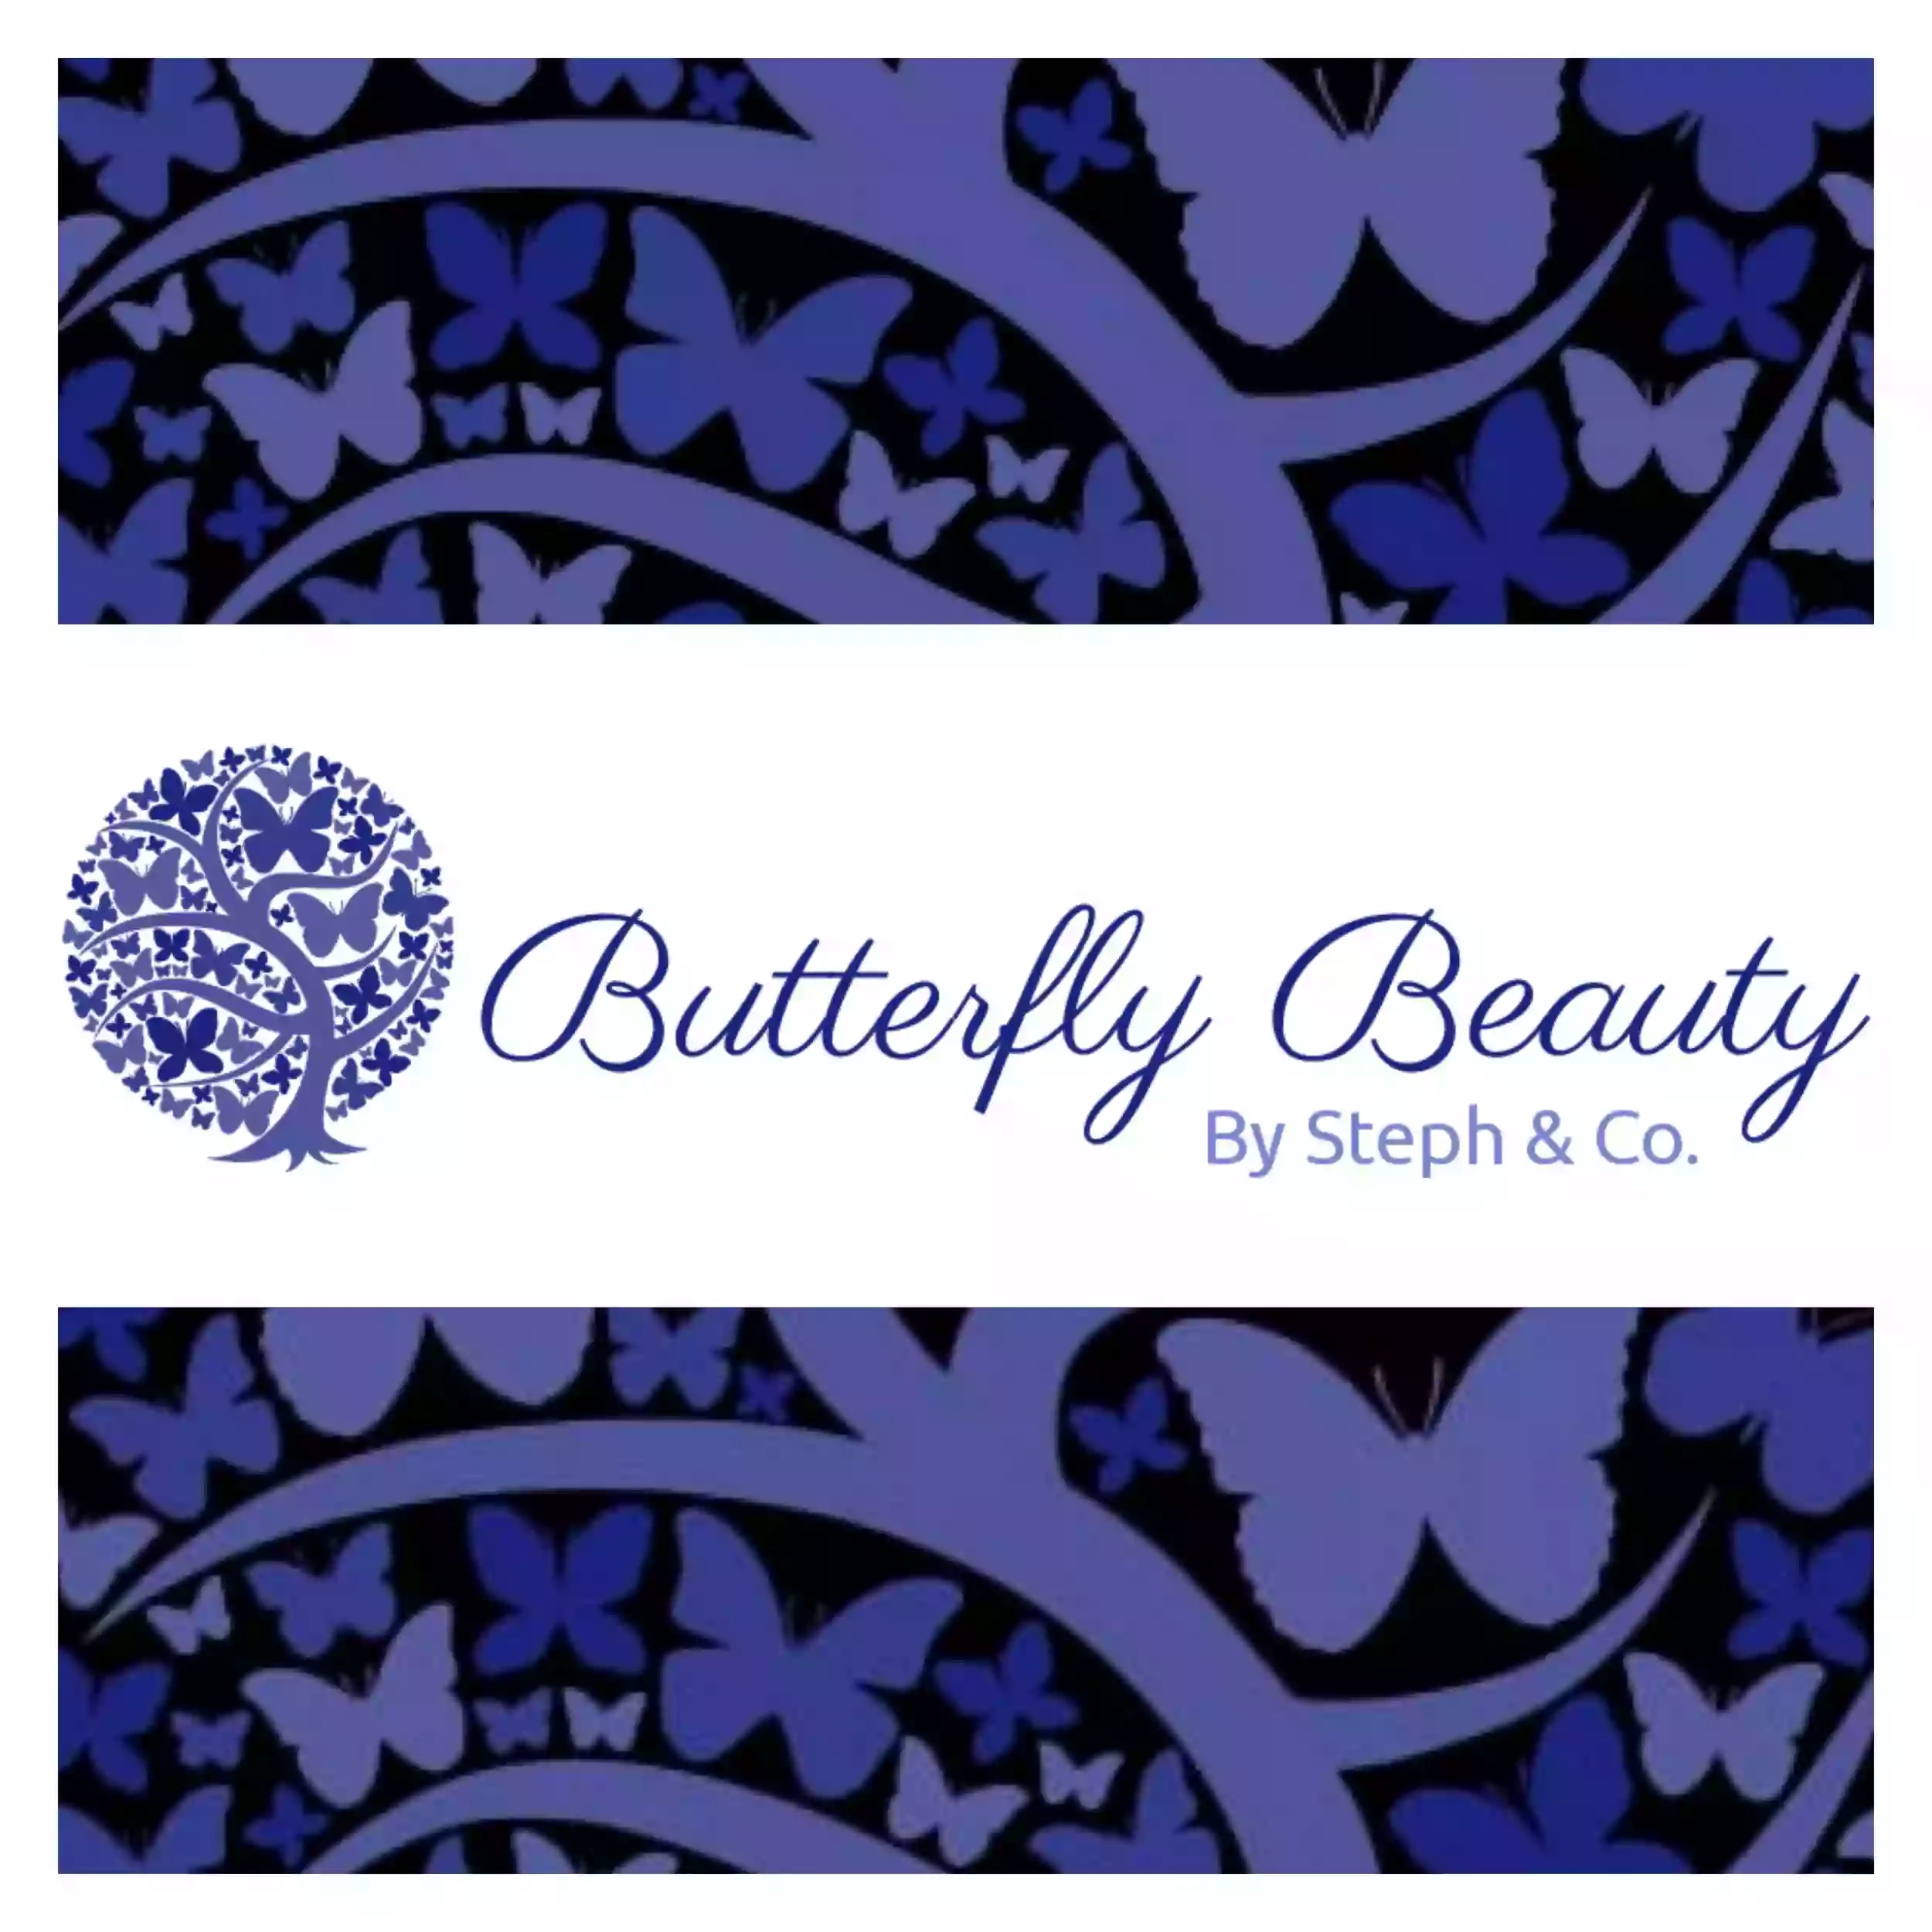 Butterfly Beauty by Steph